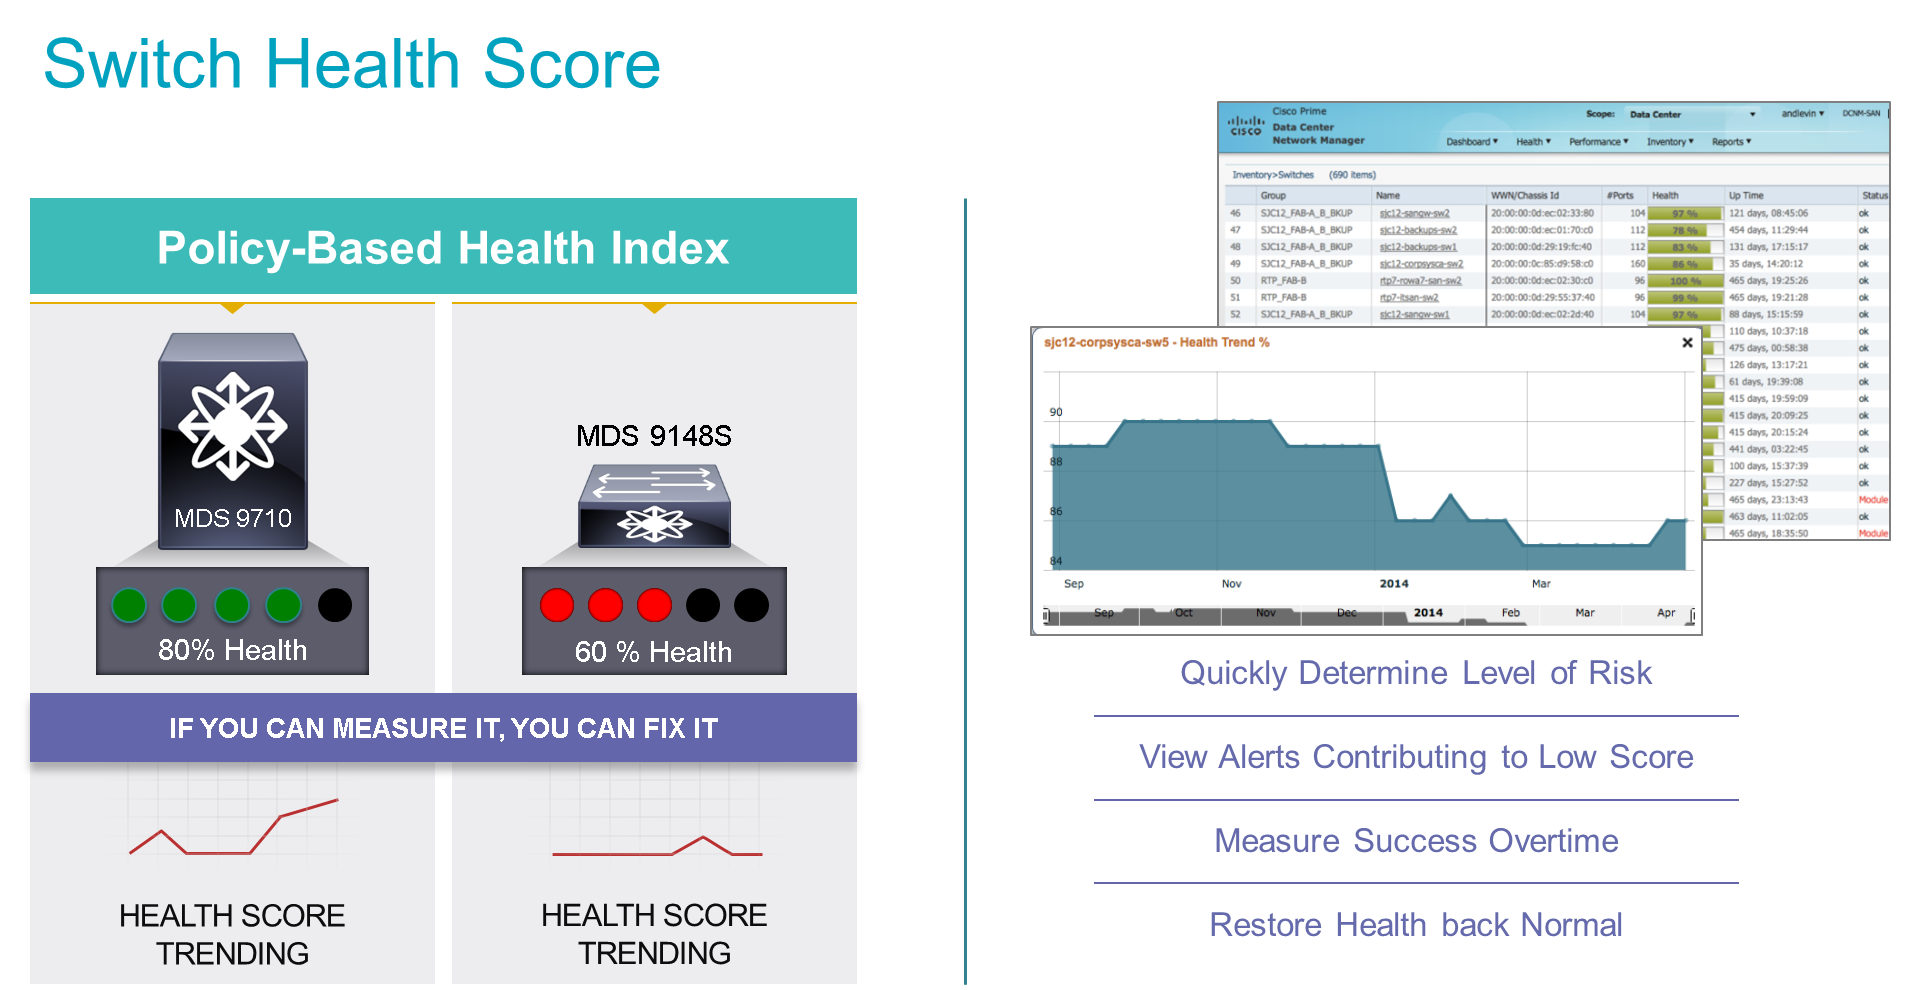 Health Score